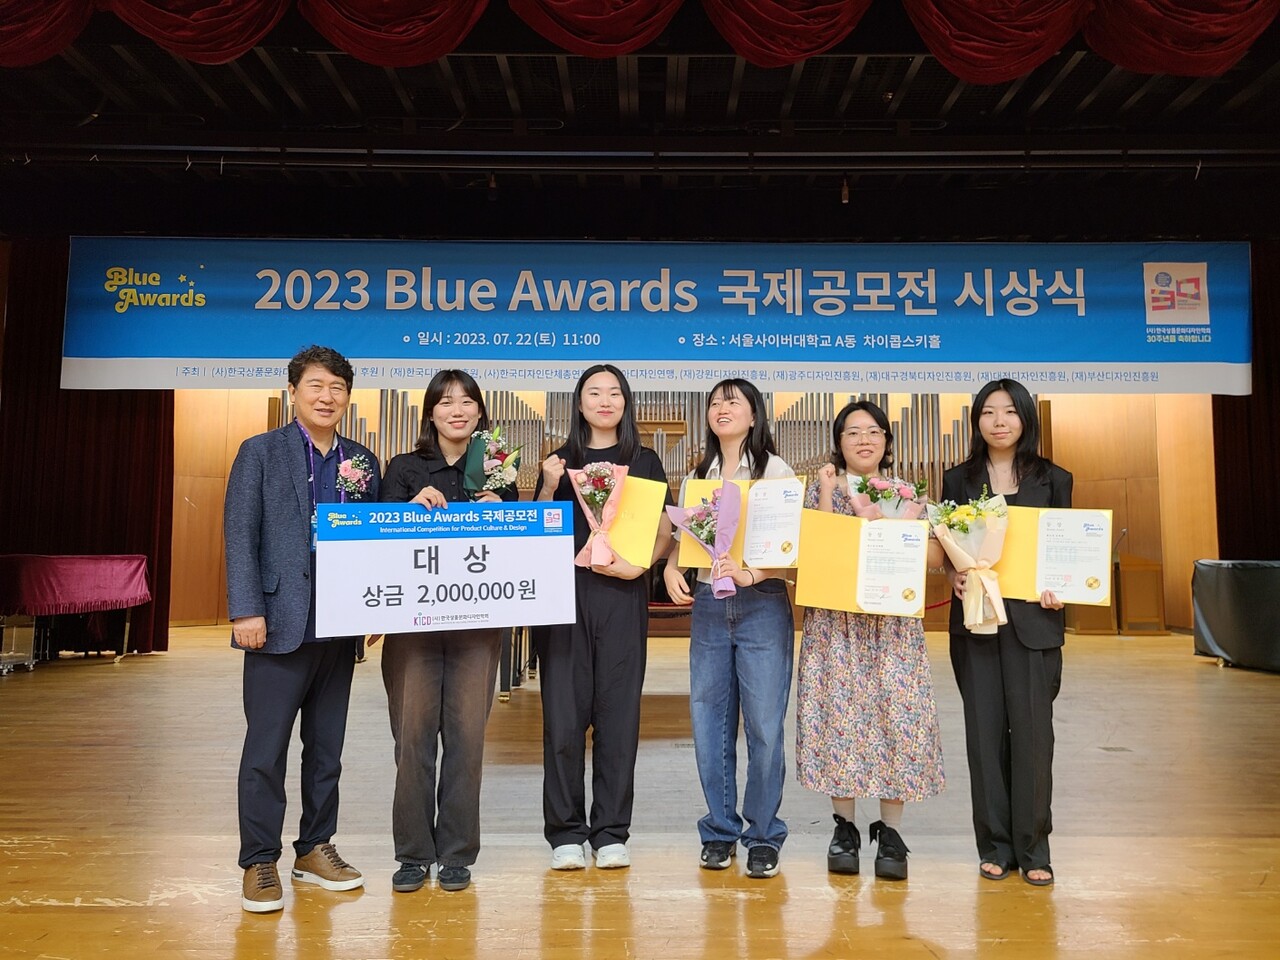 2023 Blue Awards 국제공모전 시상식 기념사진(왼쪽 첫 번째 대구대 이해만 교수, 두 번째 대상 수상자 서해영)